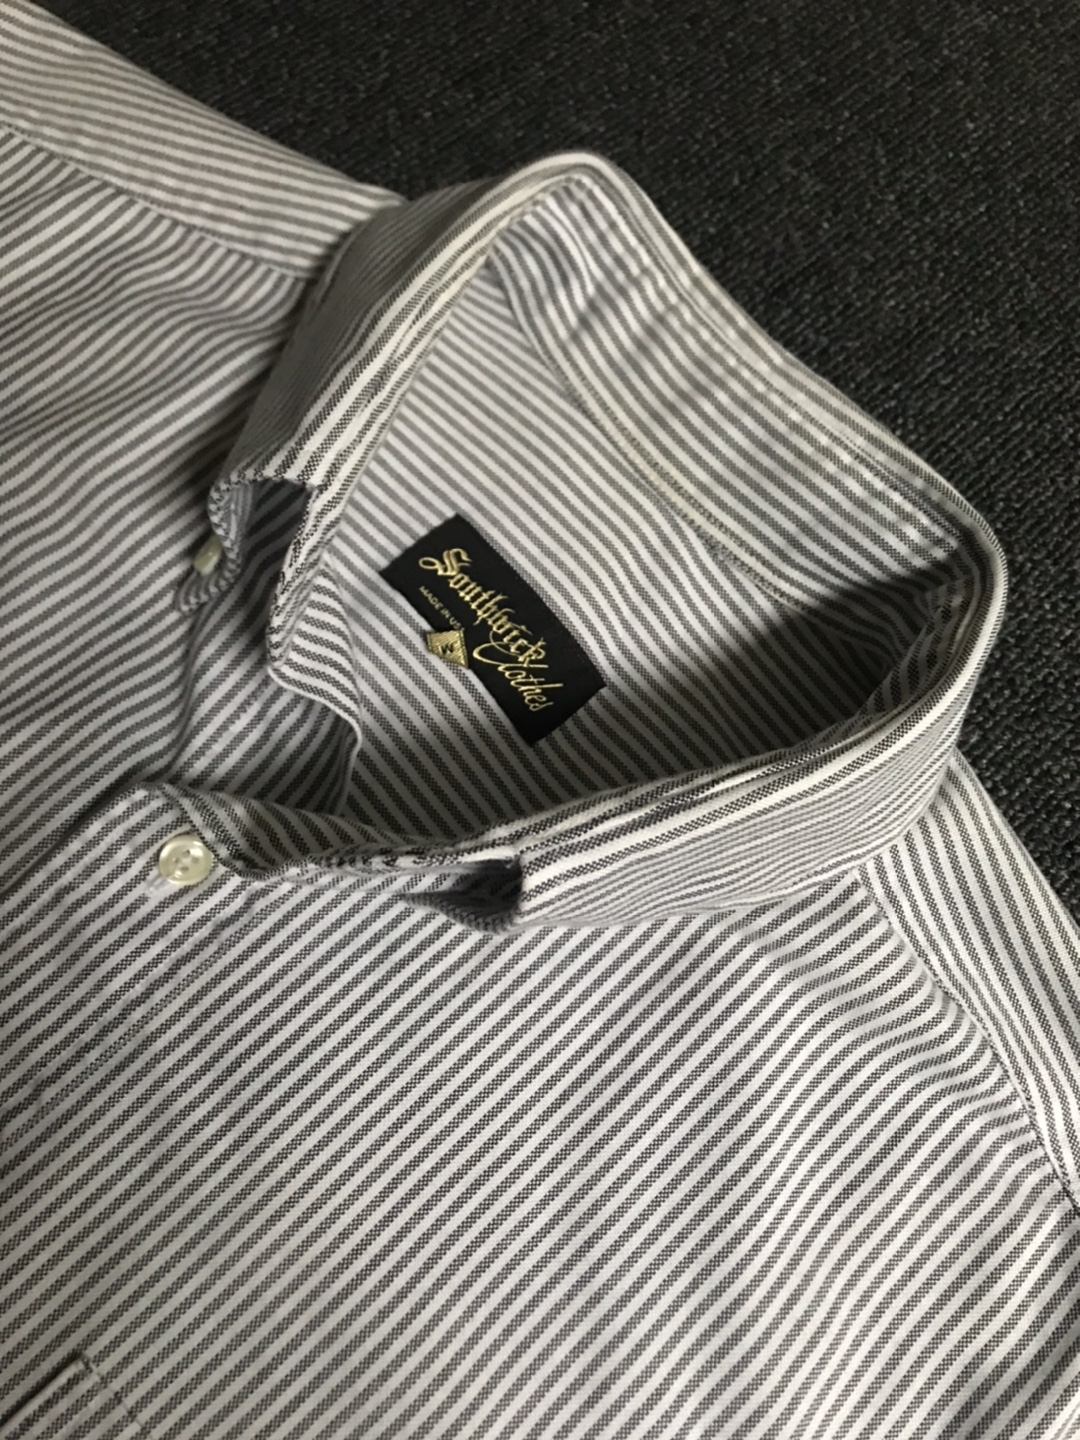 southwick stripe ocbd shirt USA made (M size, ~103 추천)